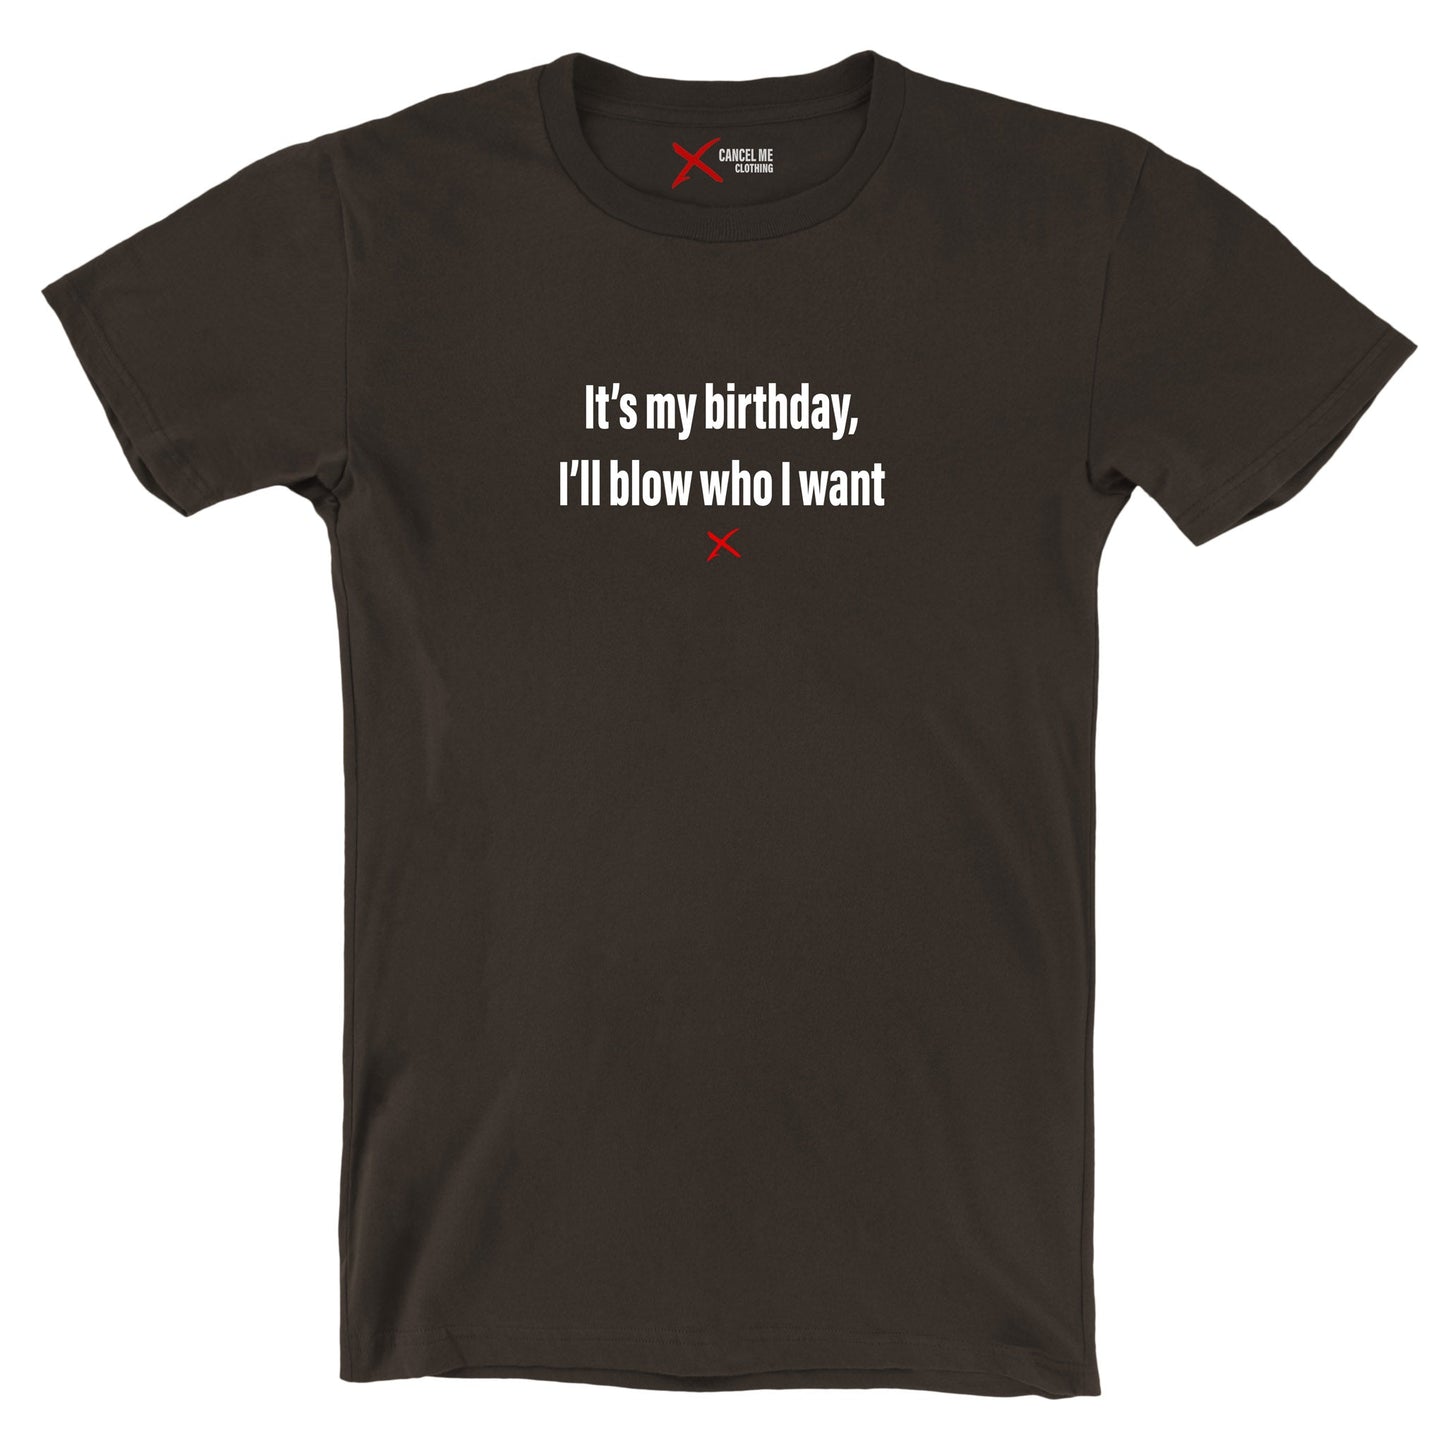 It's my birthday, I'll blow who I want - Shirt